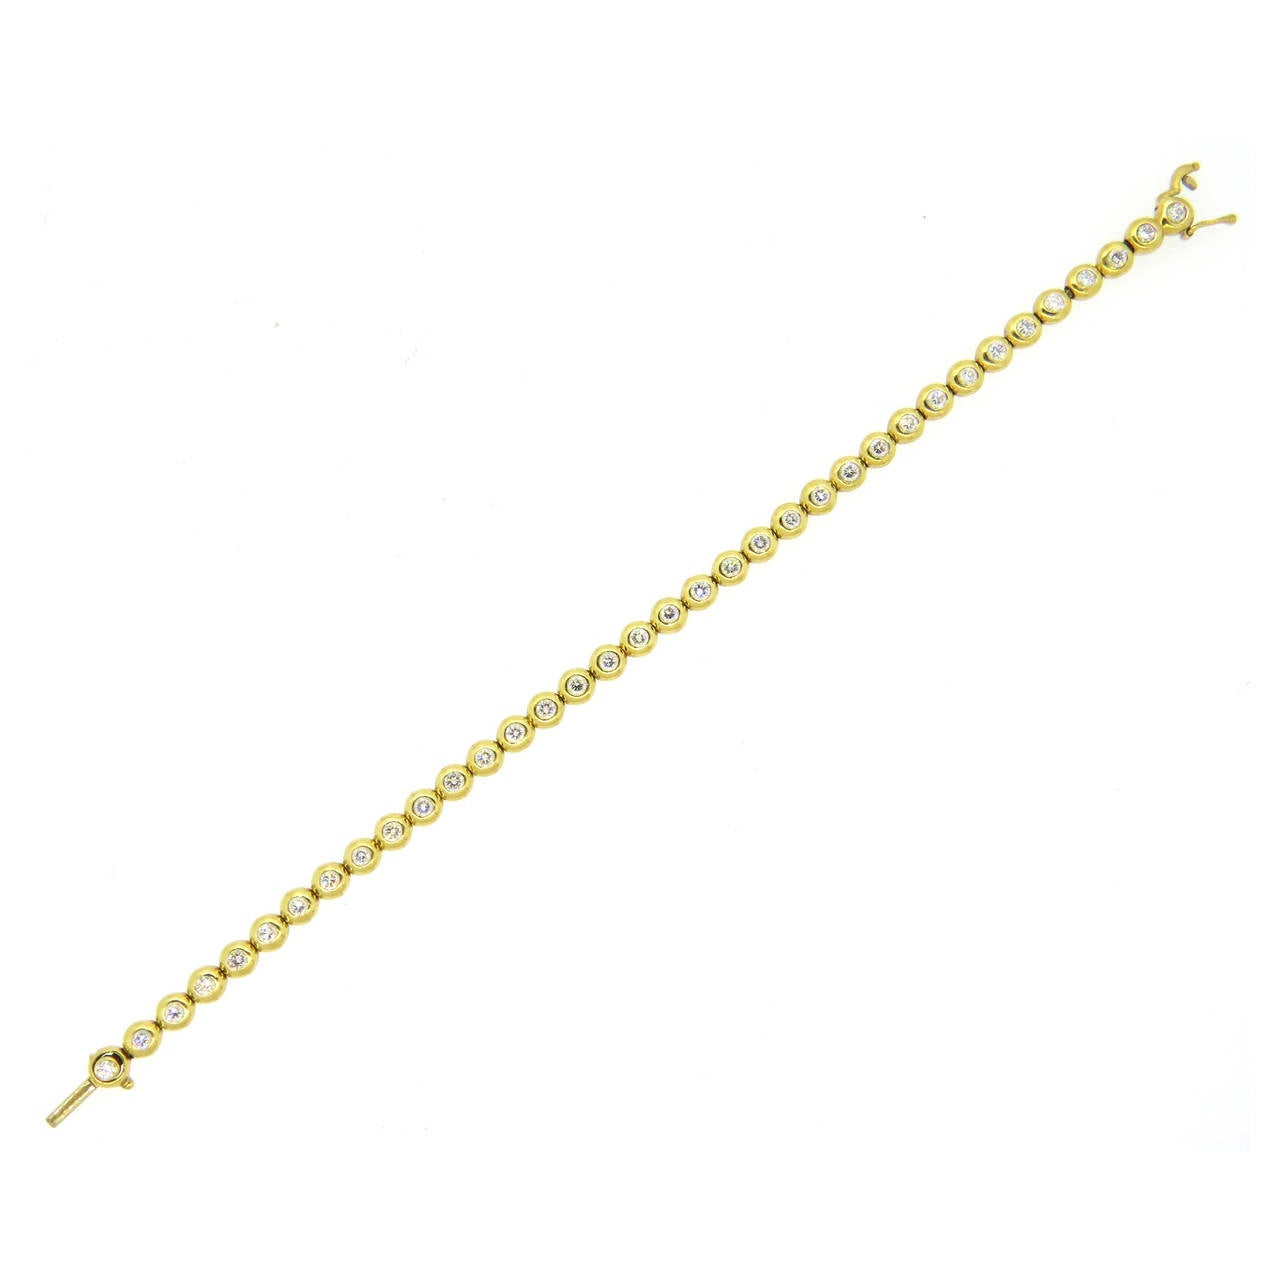 Tiffany & Co. Diamond Gold Bracelet